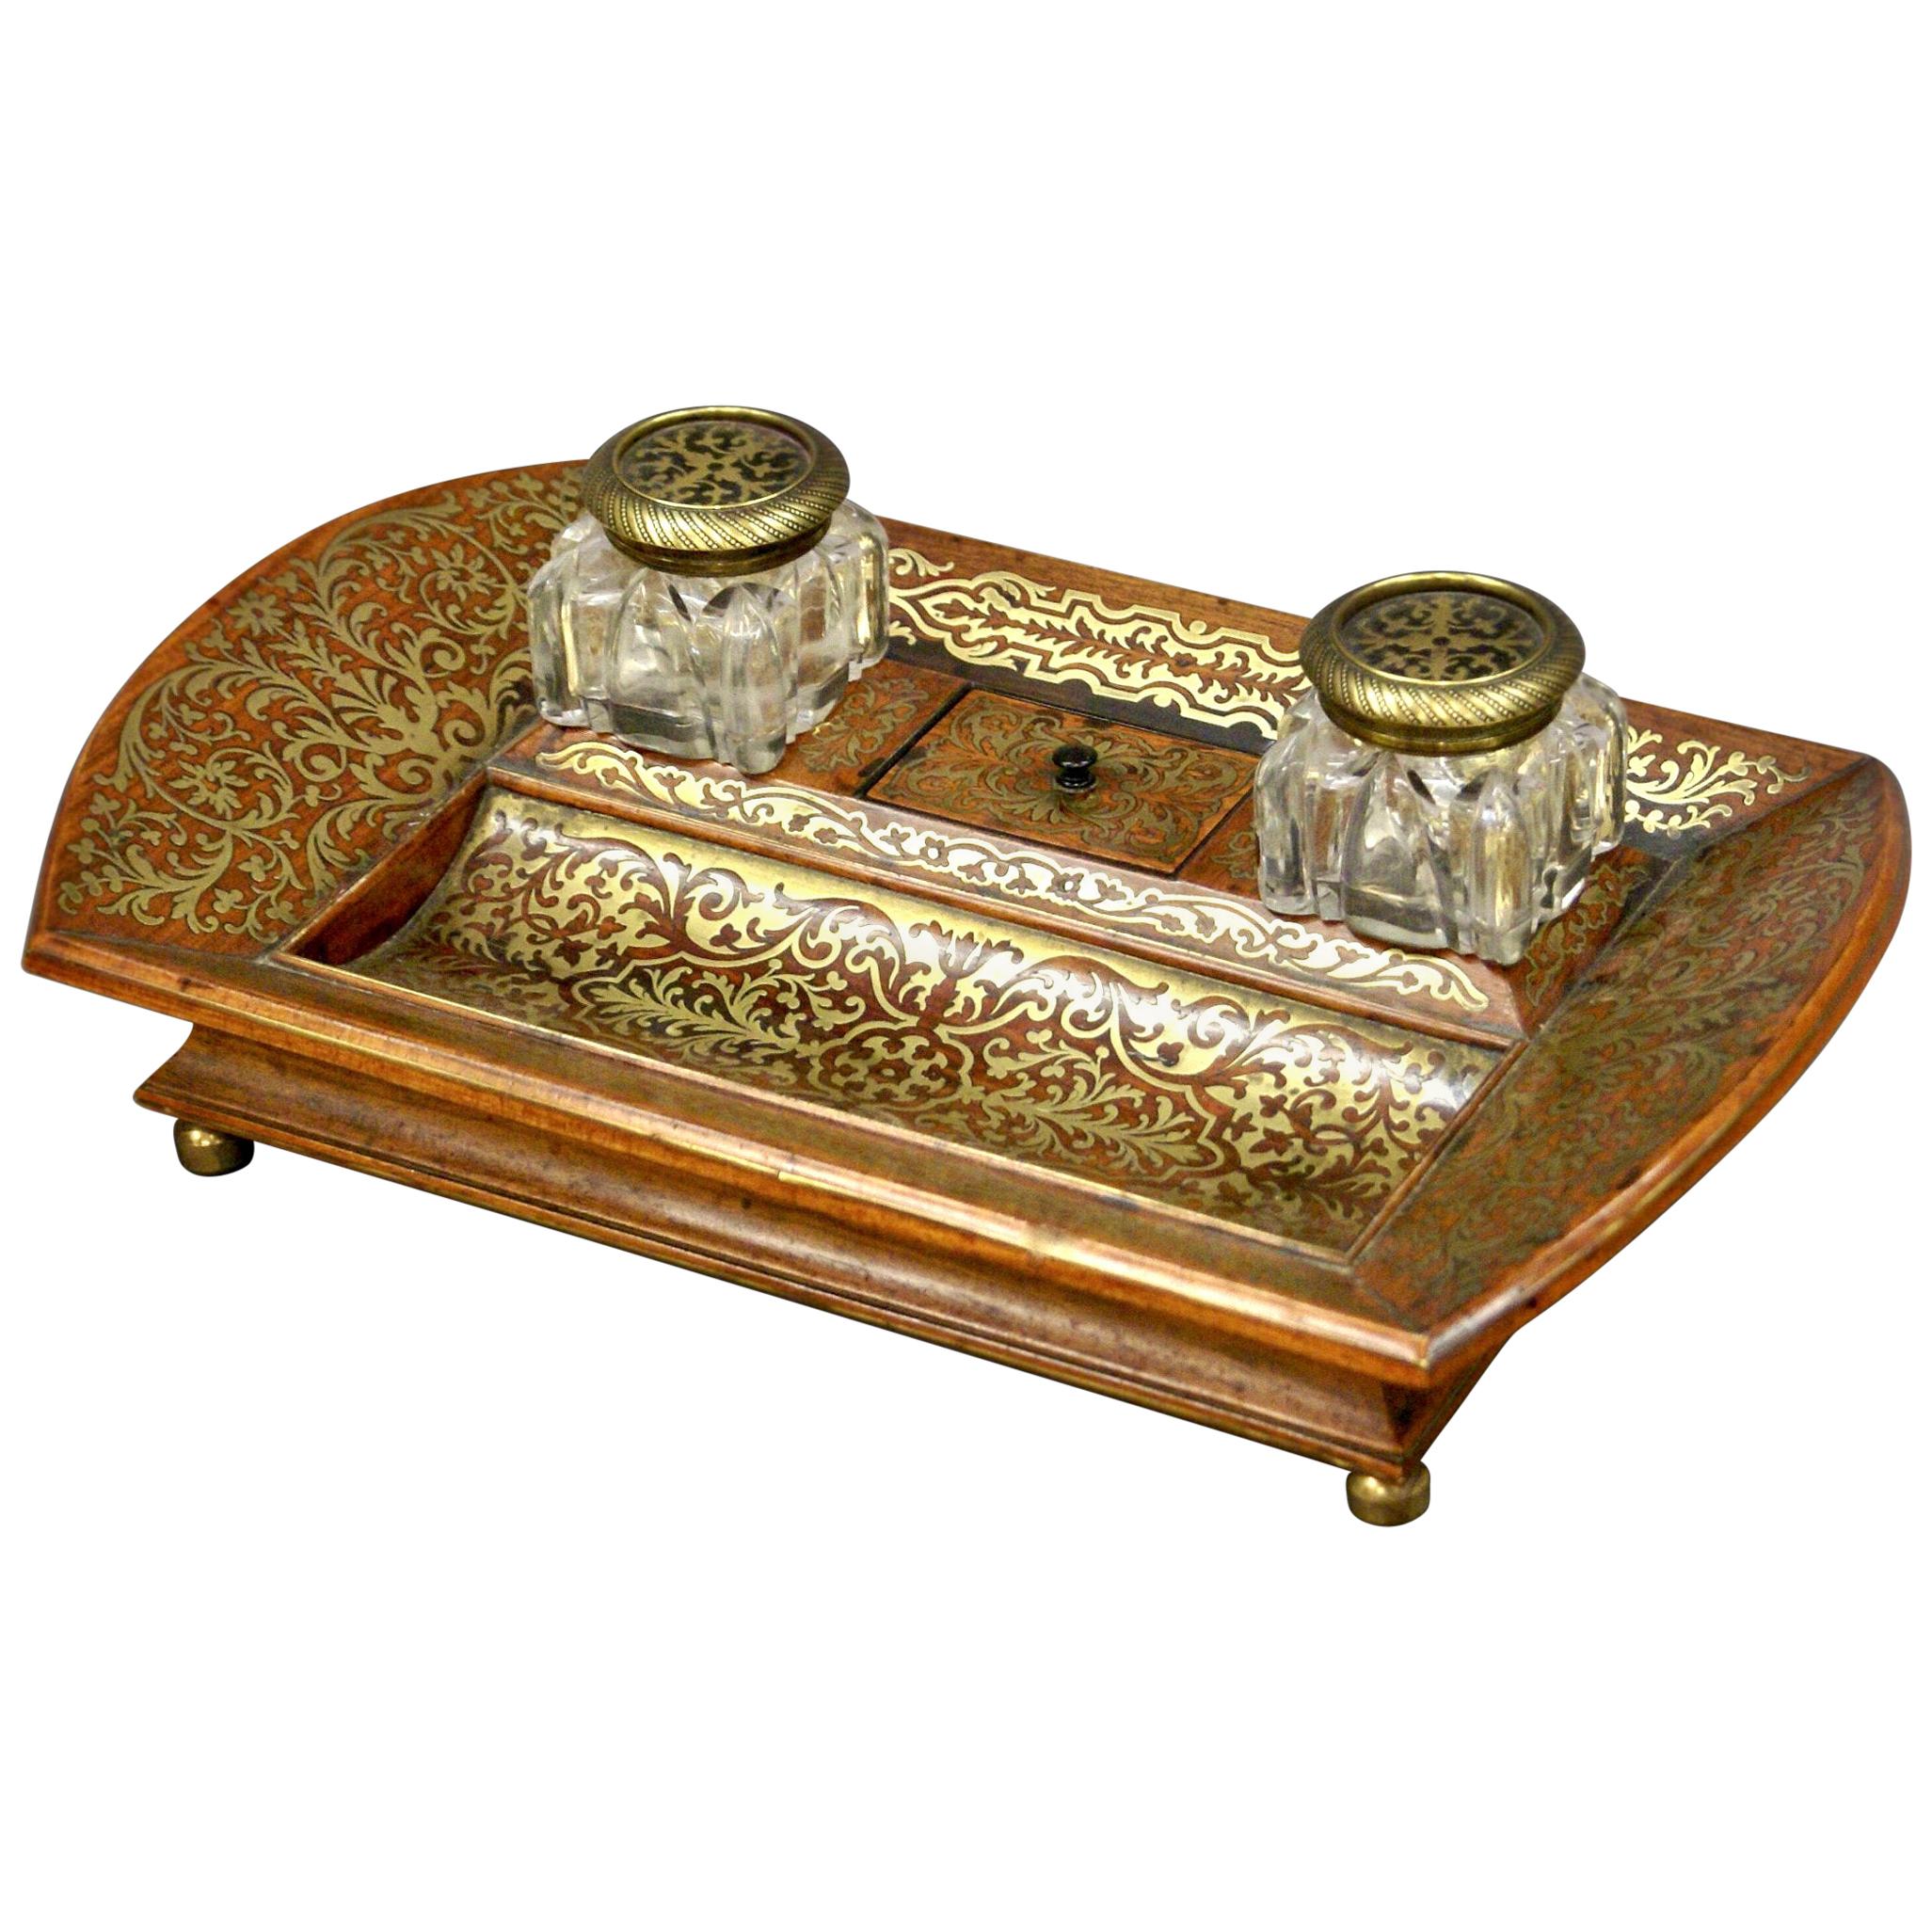 Early 19th Century Brass Inlaid Desk Inkstand